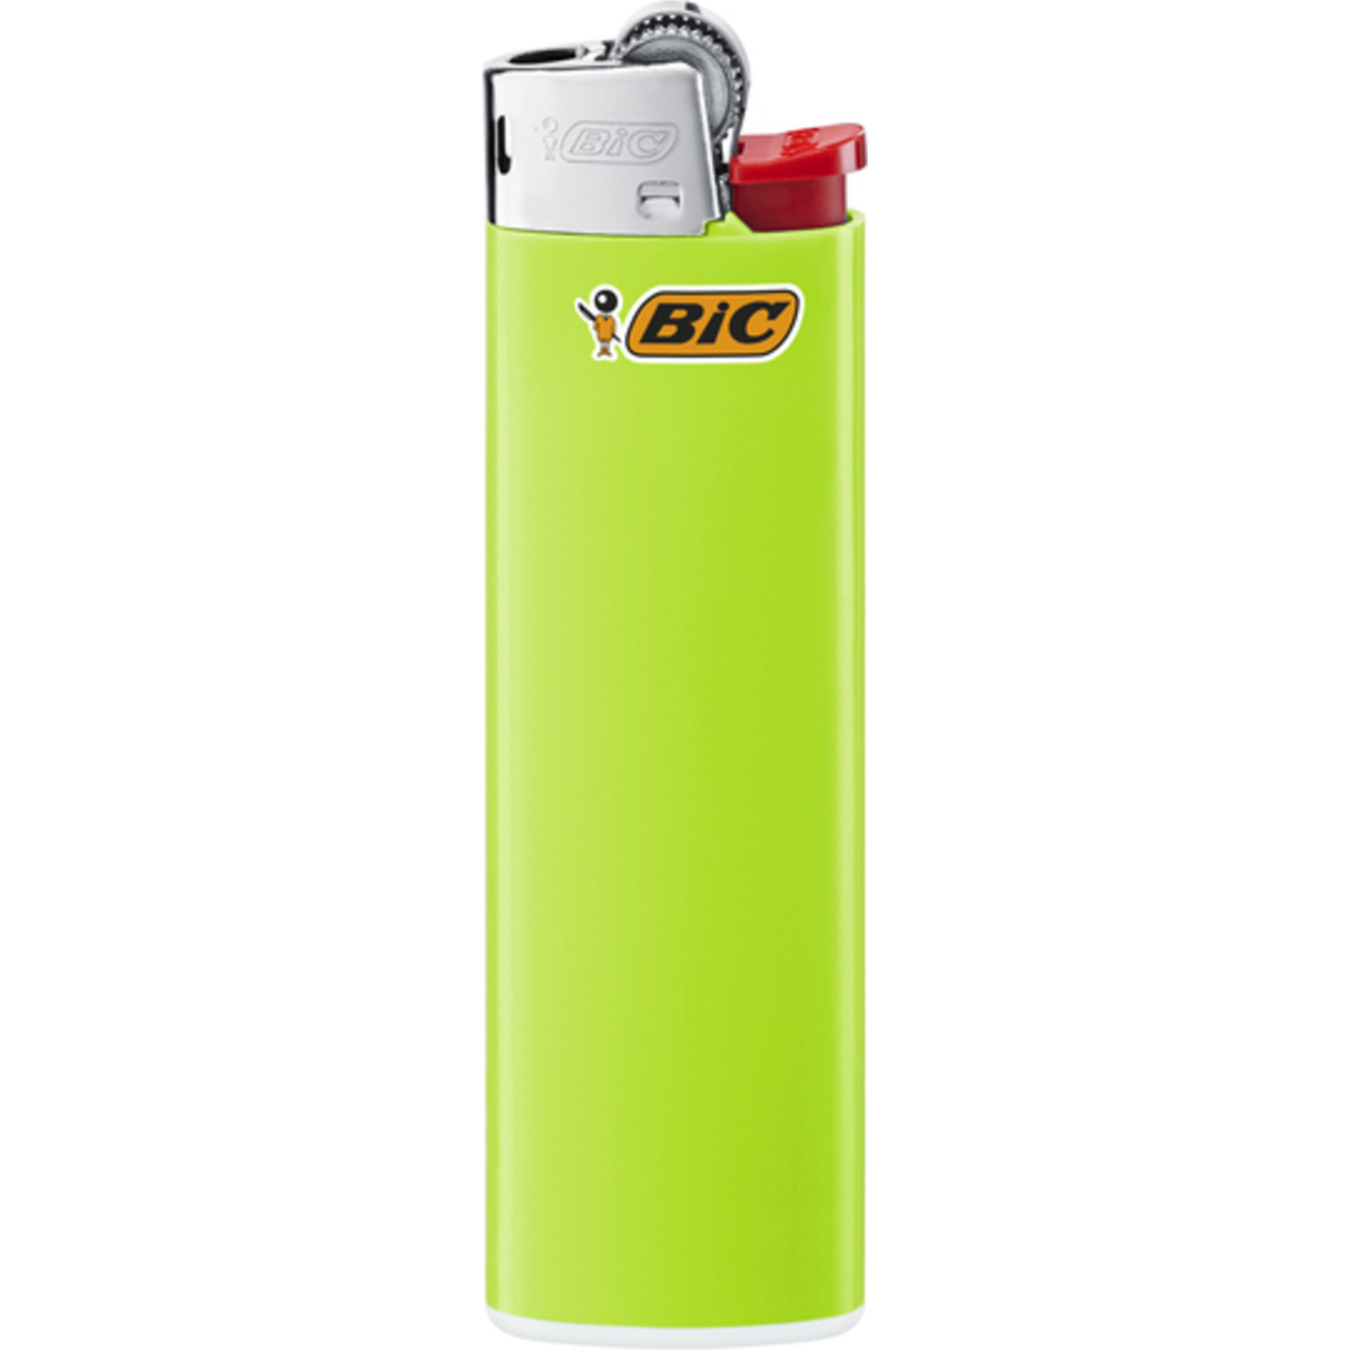 Lighter BIC J23 Slim in assortment